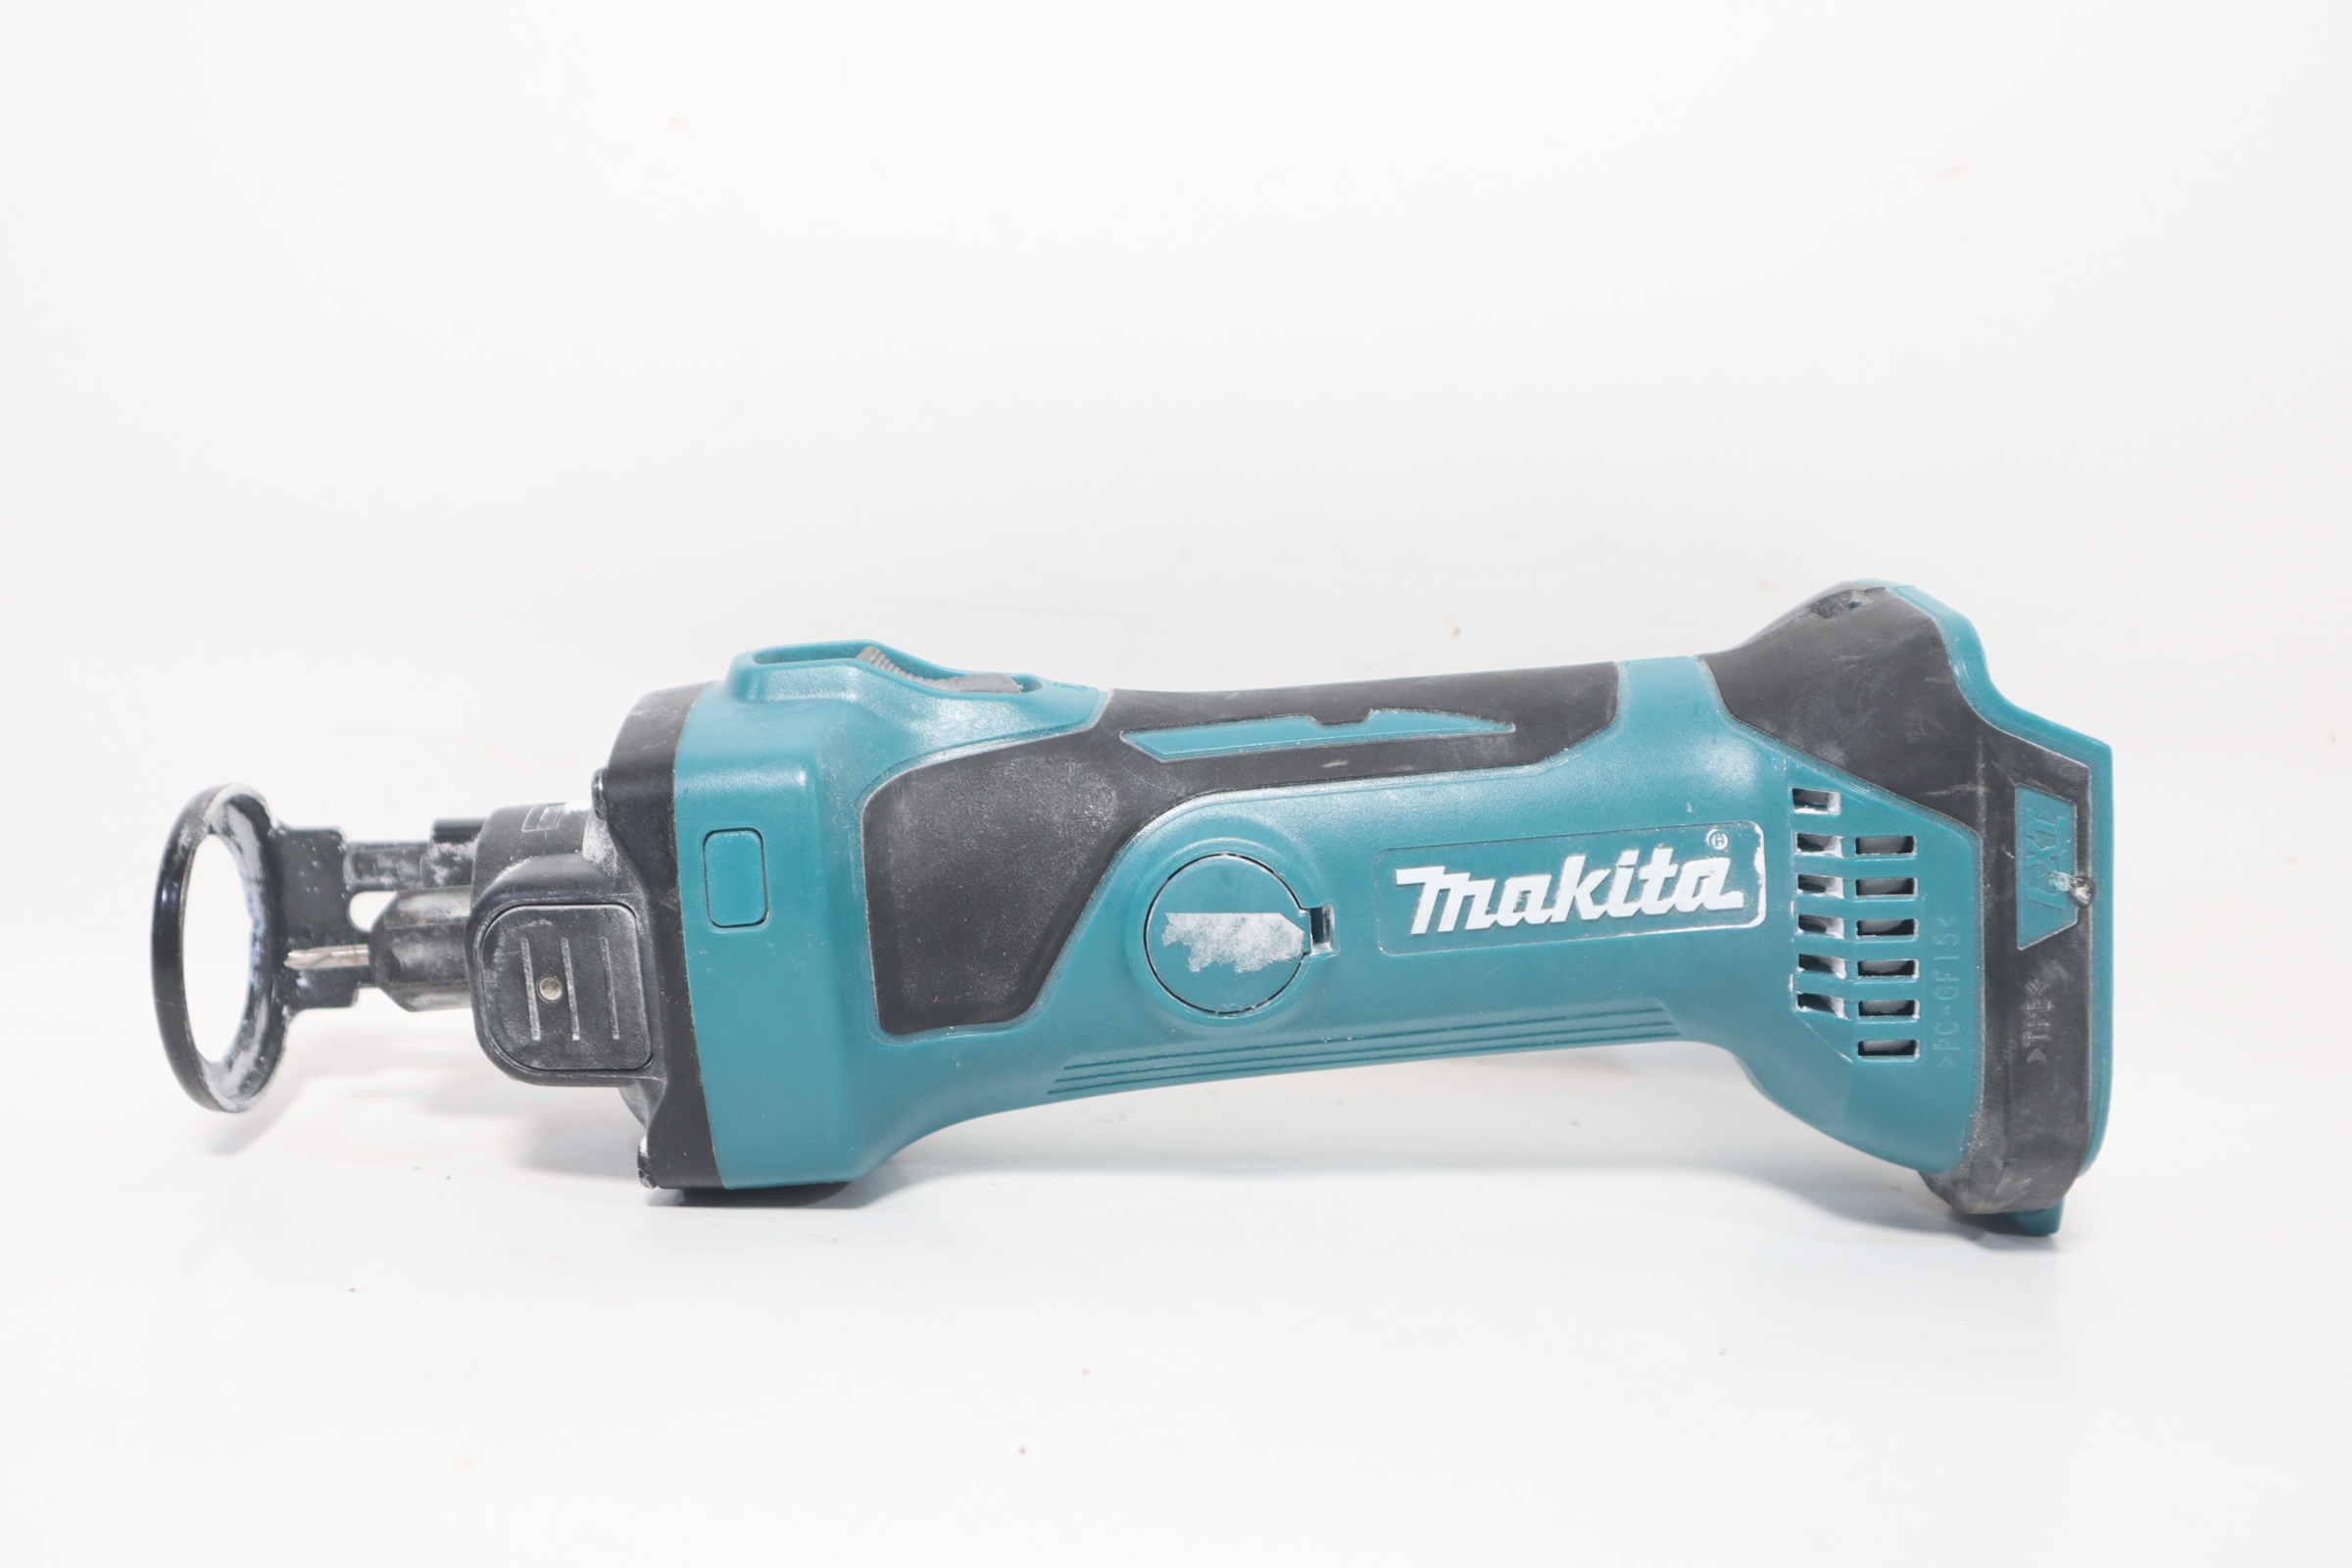 Makita drywall cut-out tool